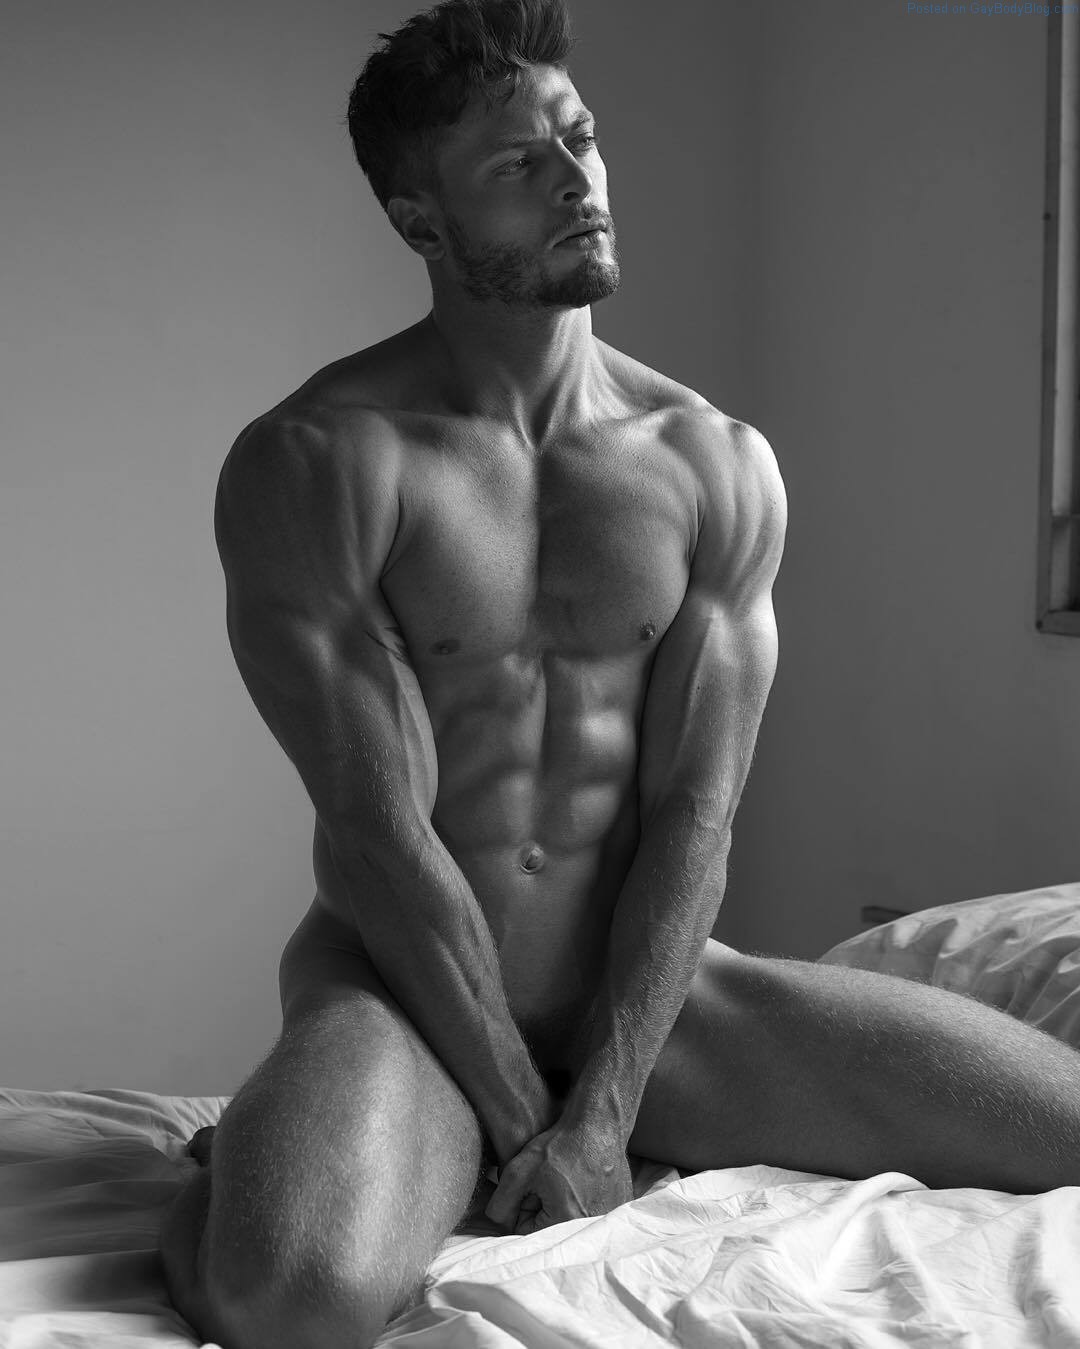 Buff And Sexy Hunk Jason Shah Is Looking Stunning - Gay Body Blog - Pics of...